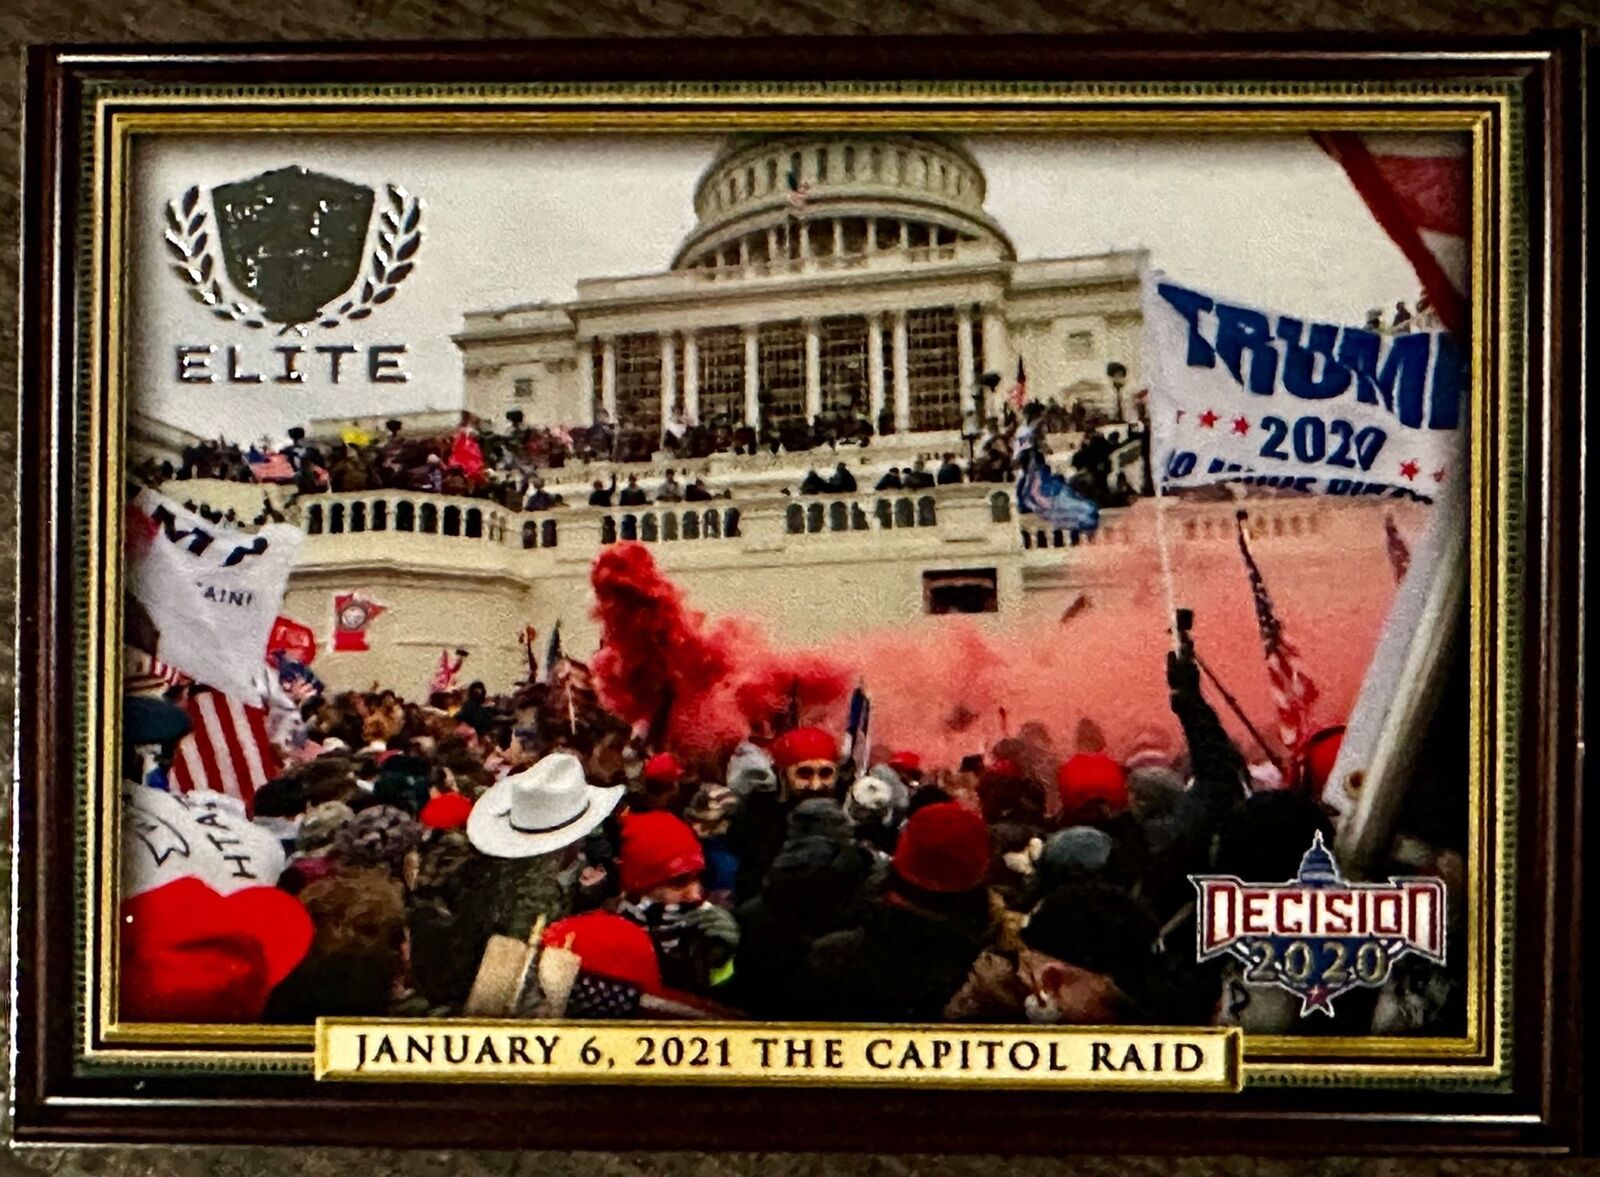 Decision 2020 January 6, 2021  “The Capitol Raid”